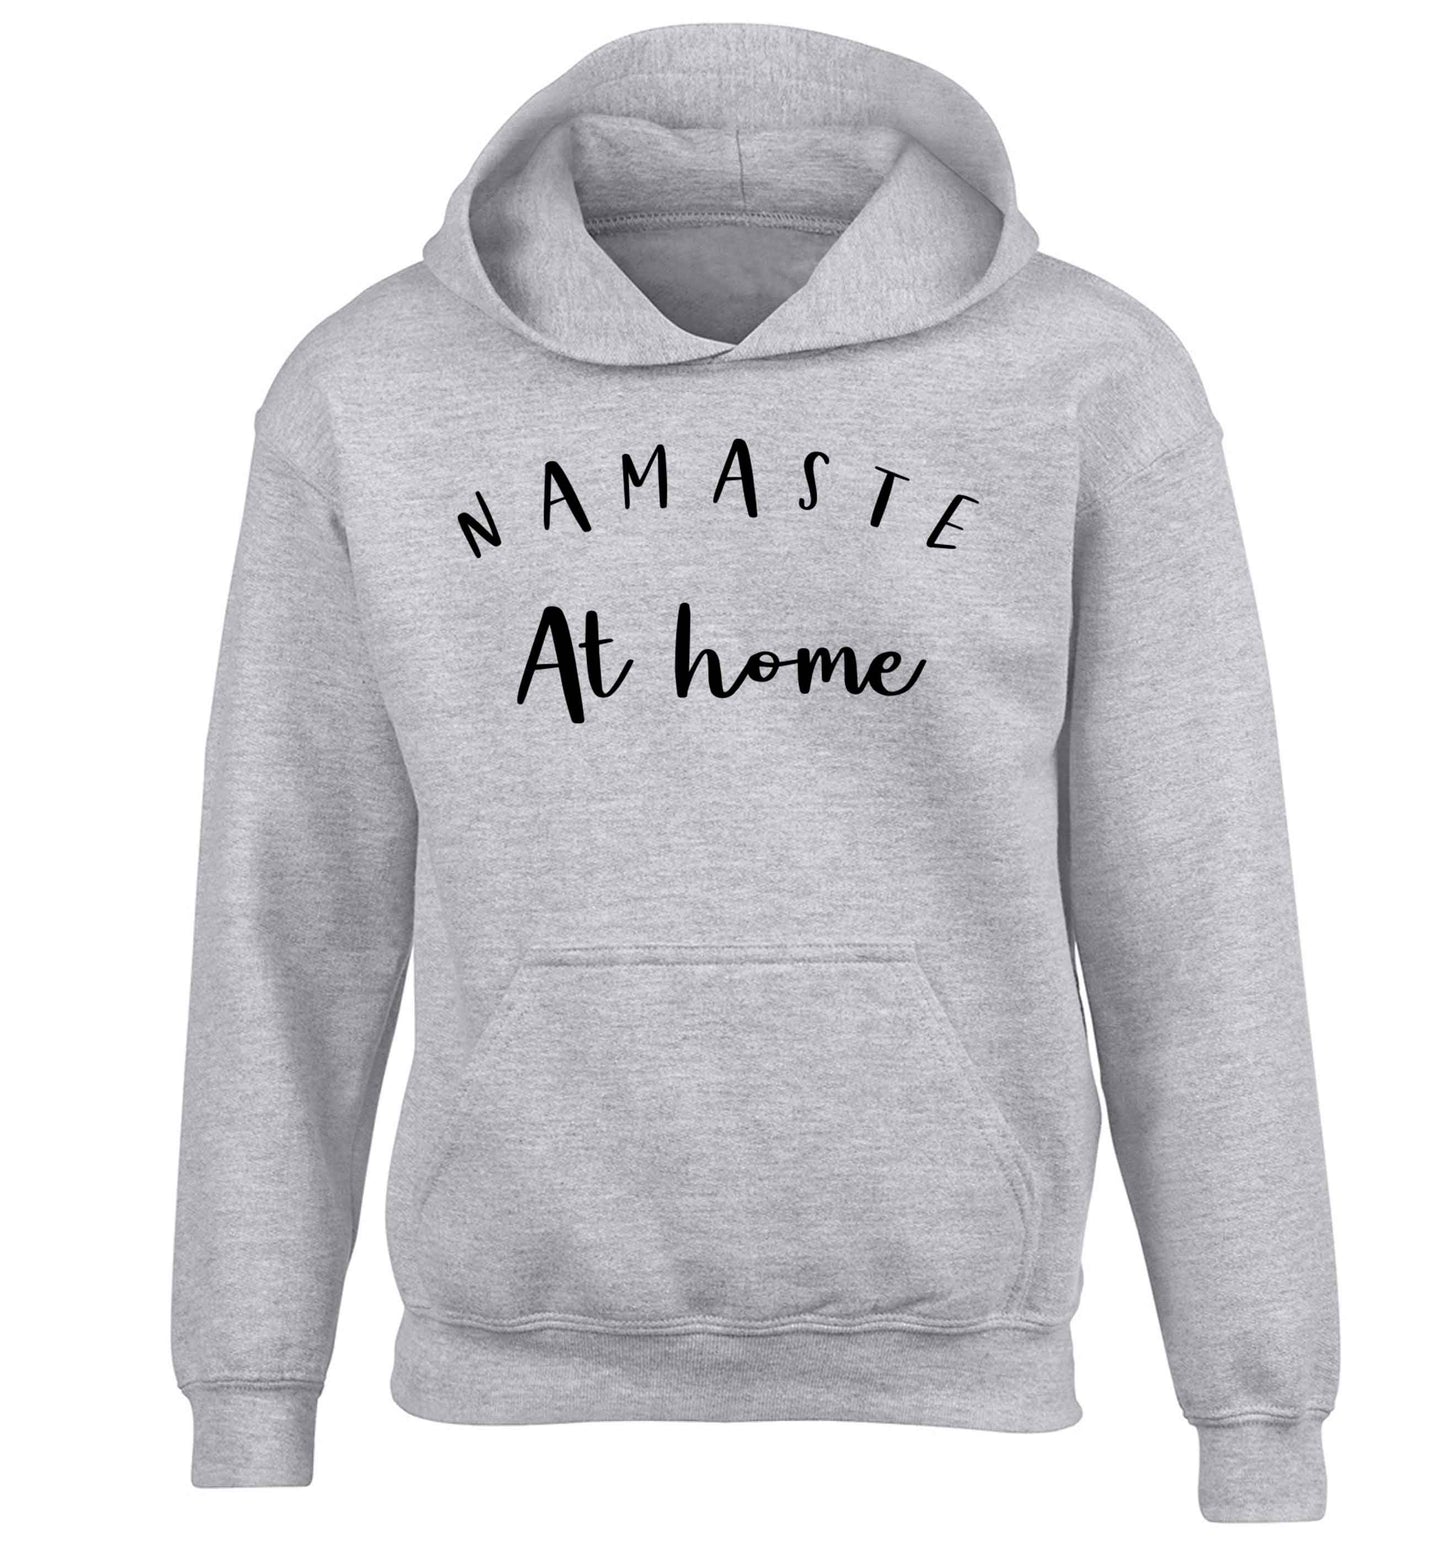 Namaste at home children's grey hoodie 12-13 Years